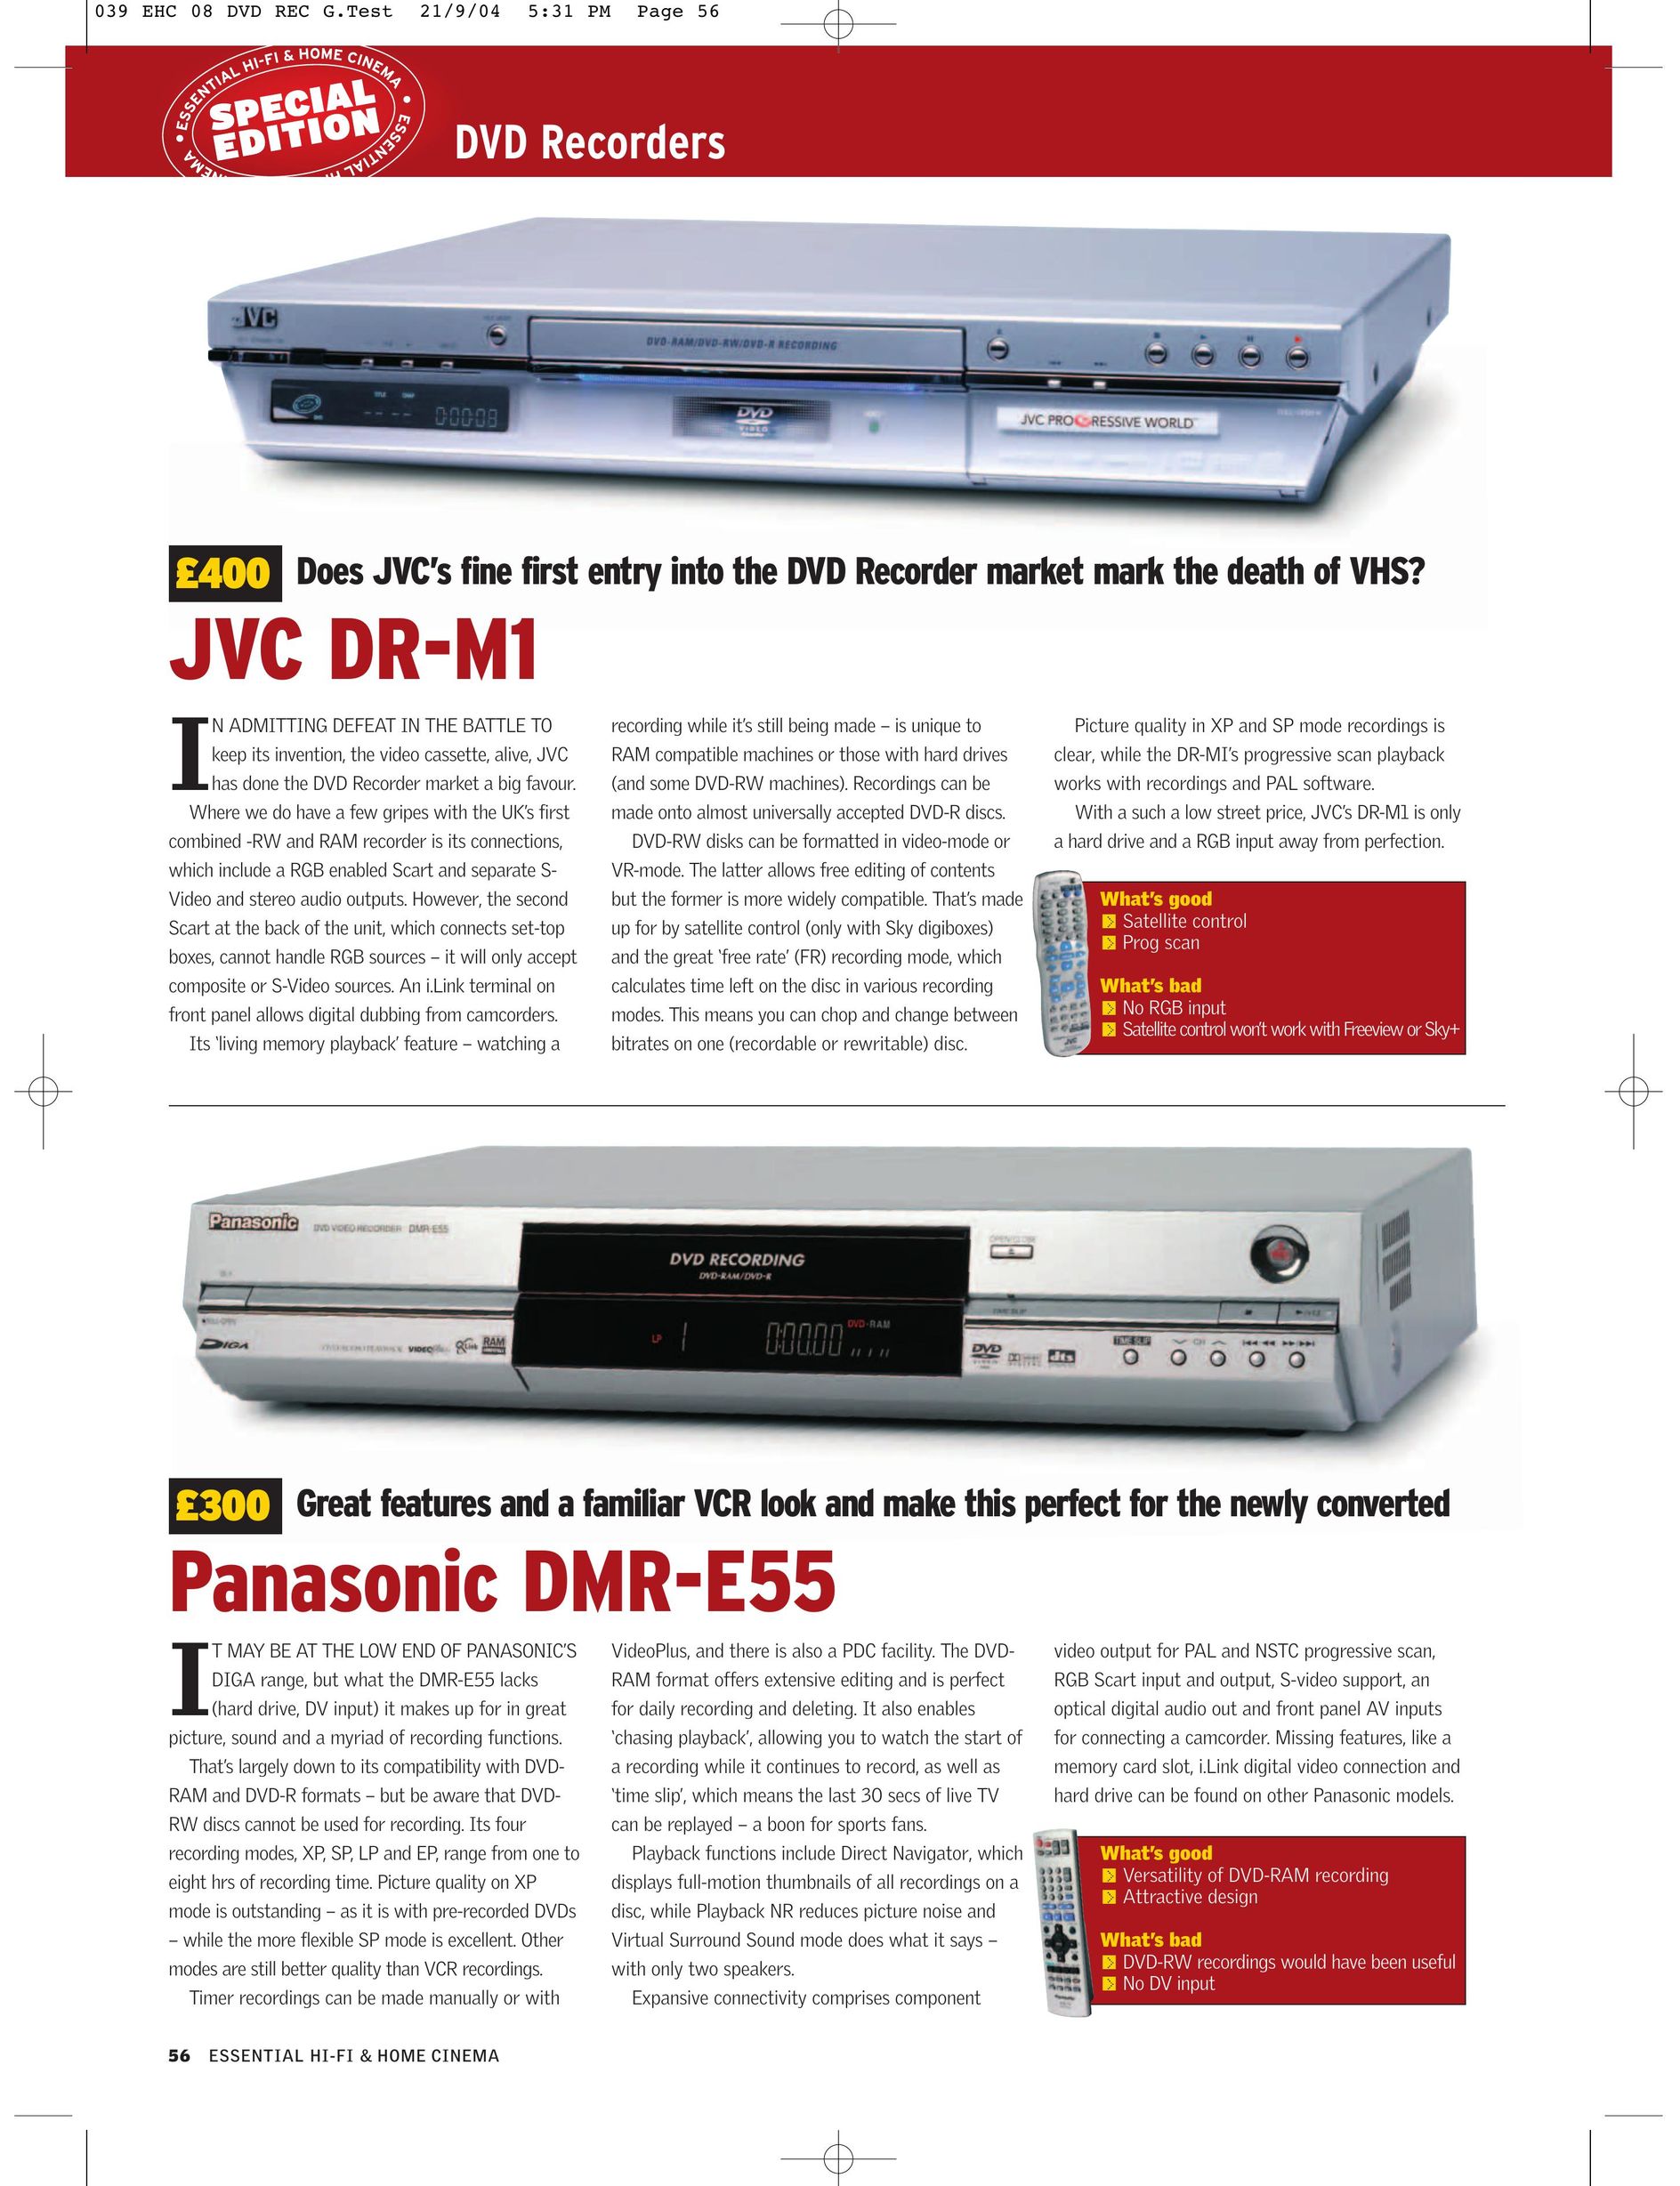 Humax DMR-E55 DVD Recorder User Manual